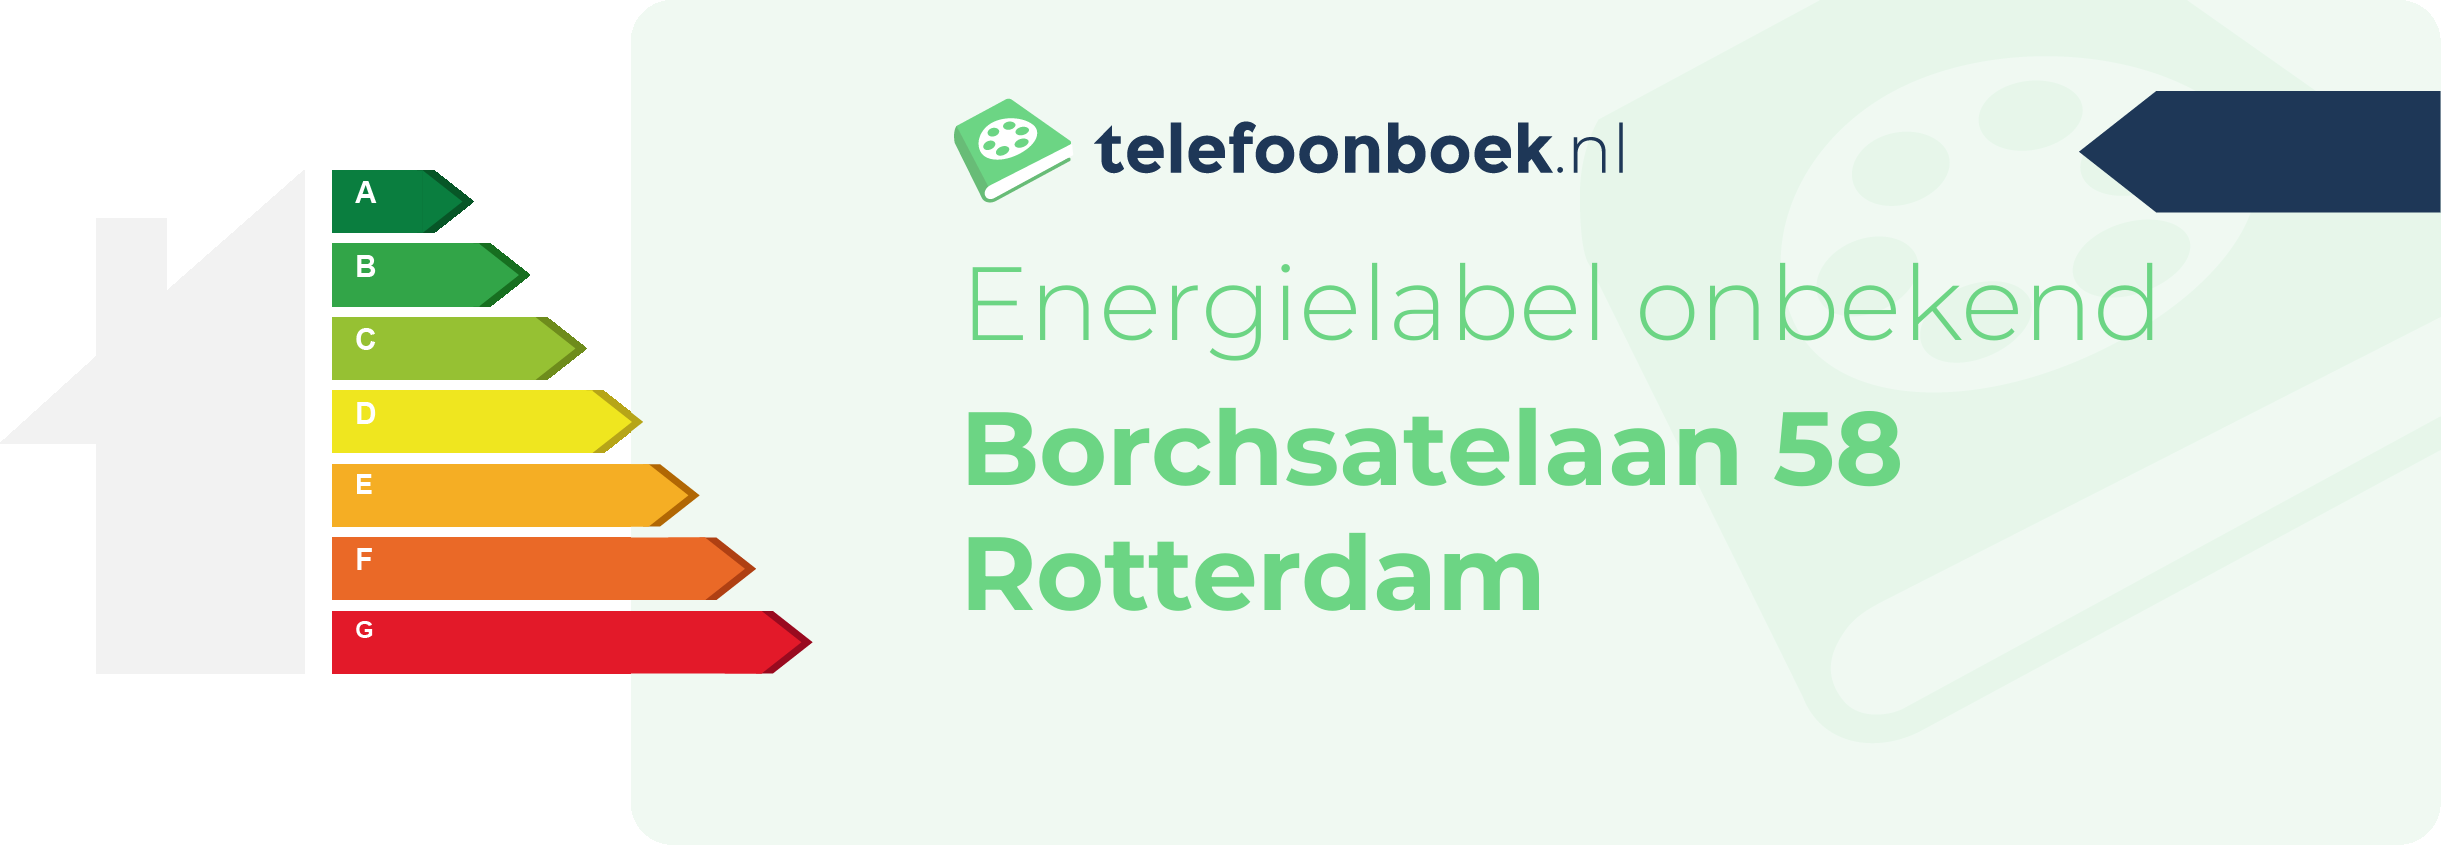 Energielabel Borchsatelaan 58 Rotterdam